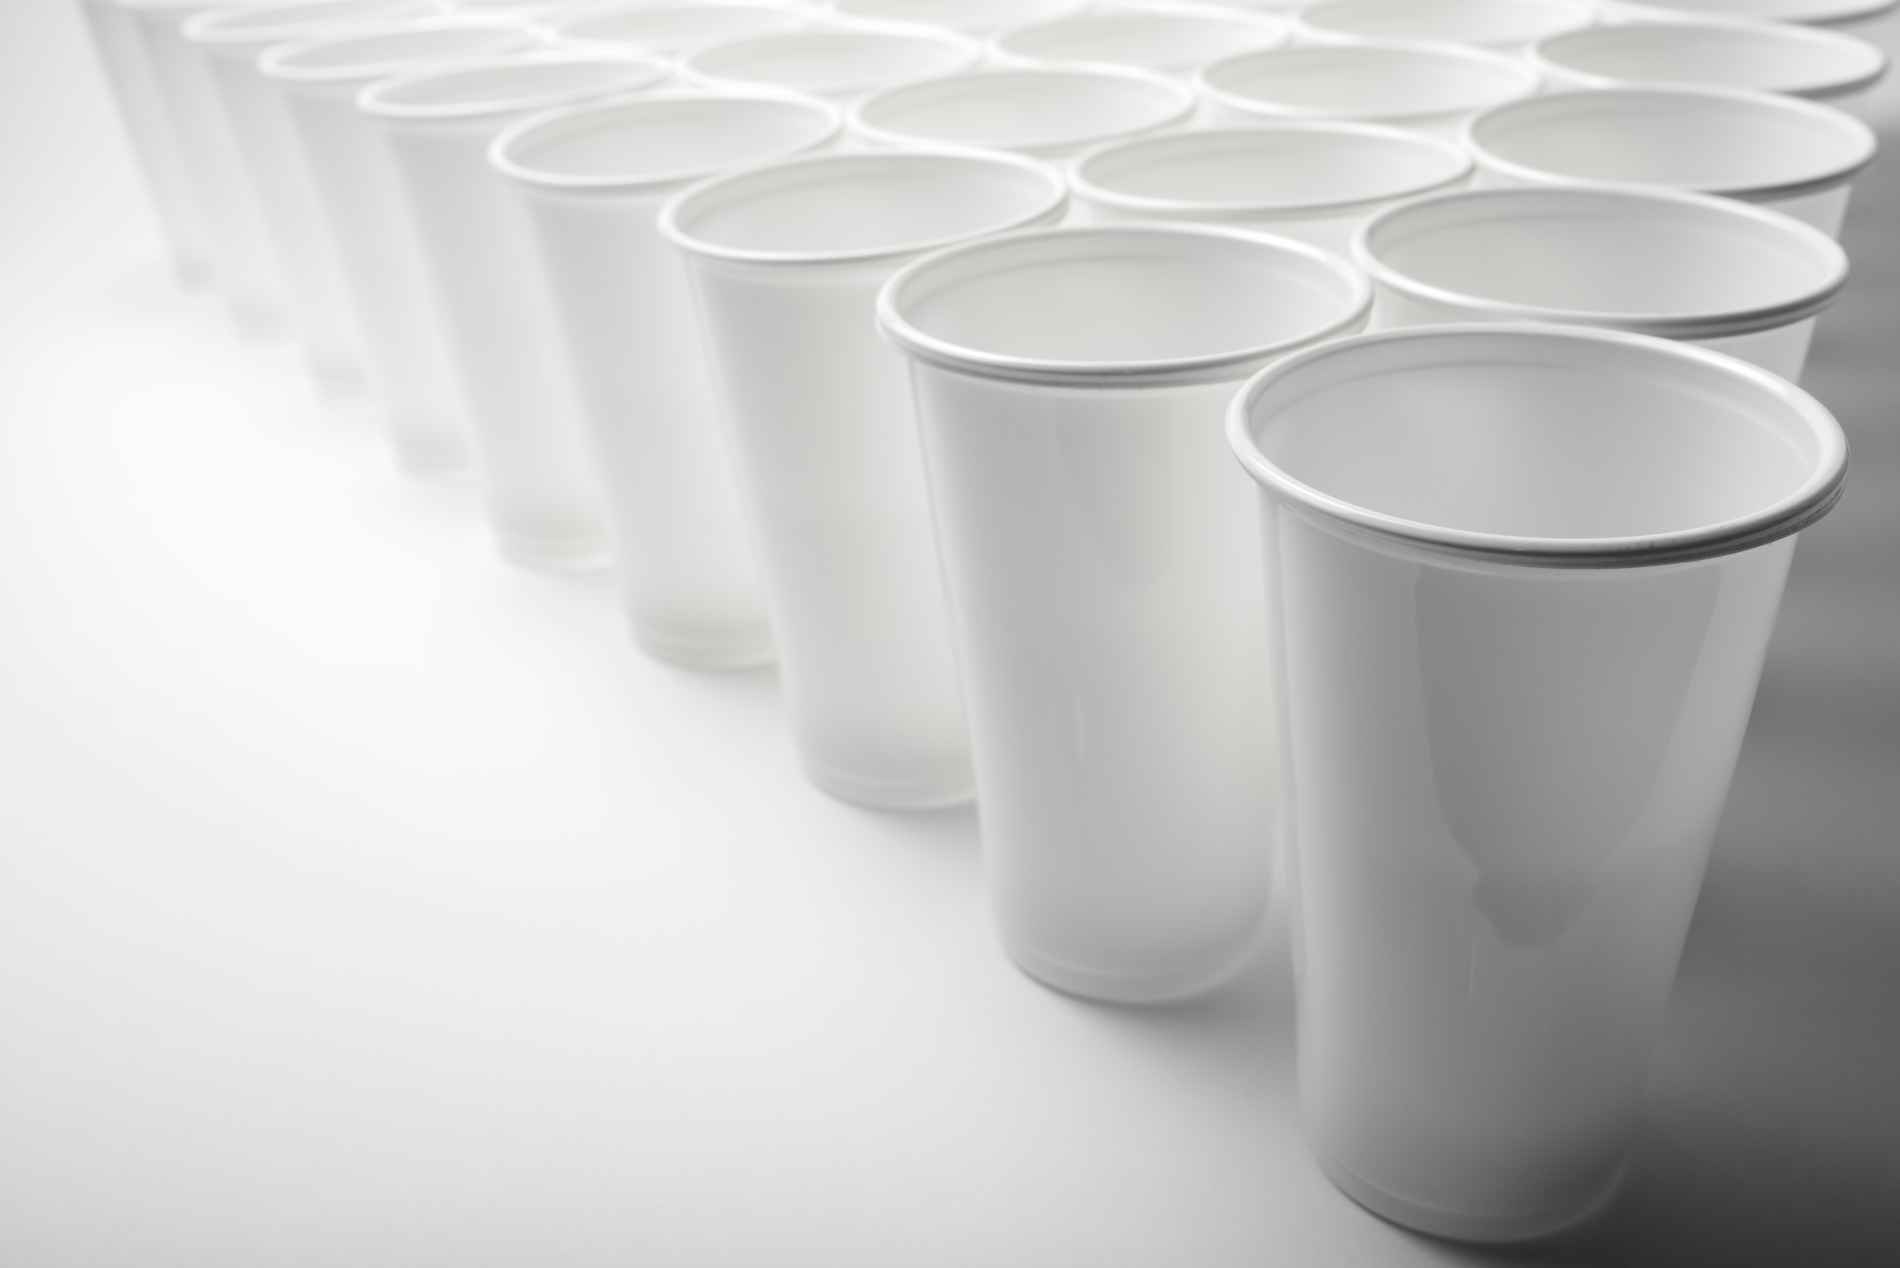 https://www.bliitt.com/wp-content/uploads/2022/08/5-Plastic-Cups-B22023-B22031.jpg